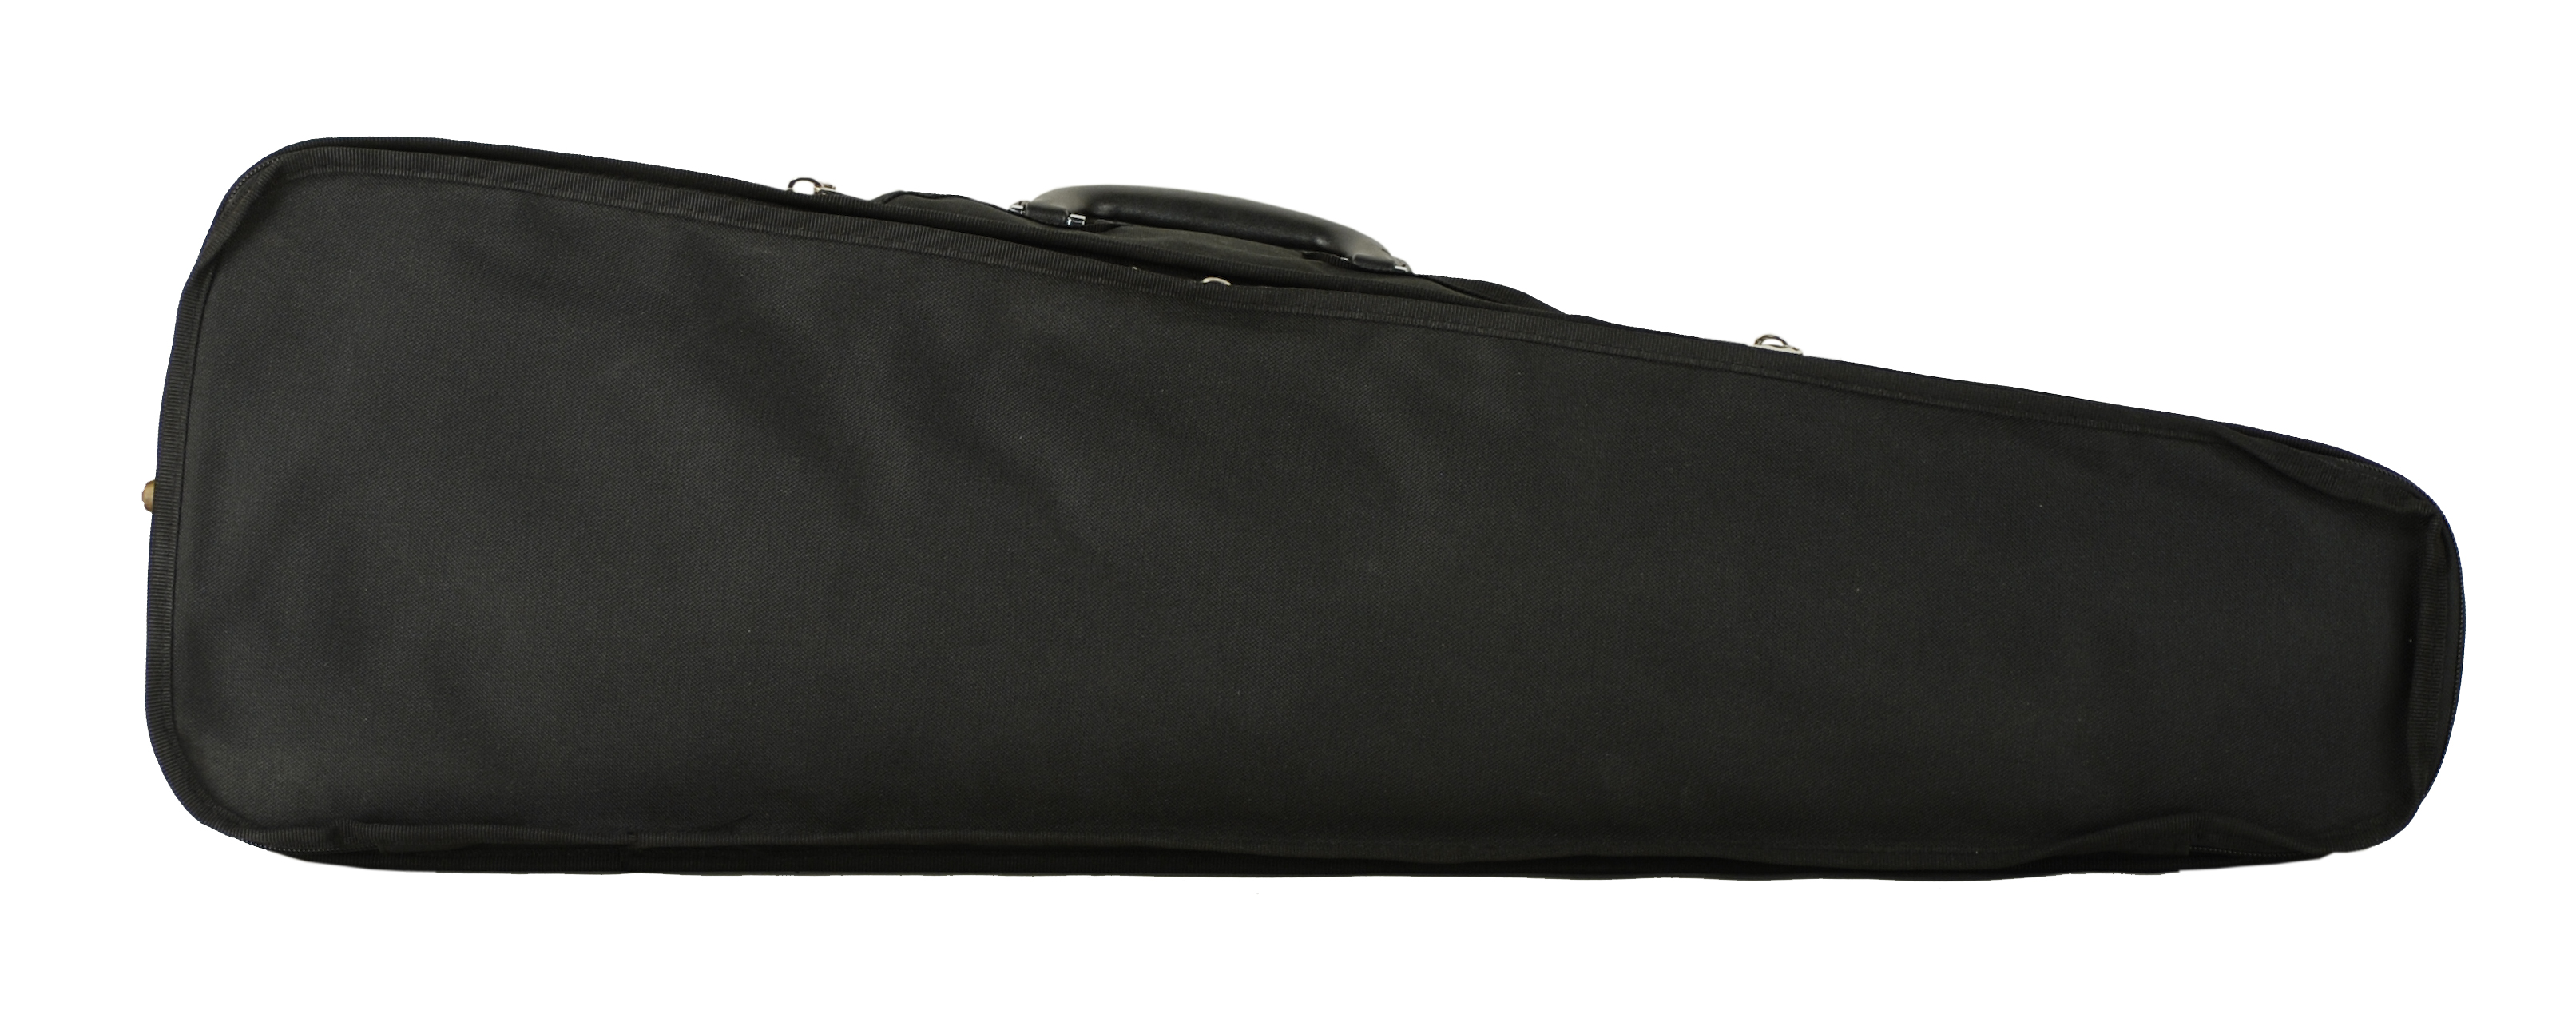 GEWA Rucksack for violin case Space Bag